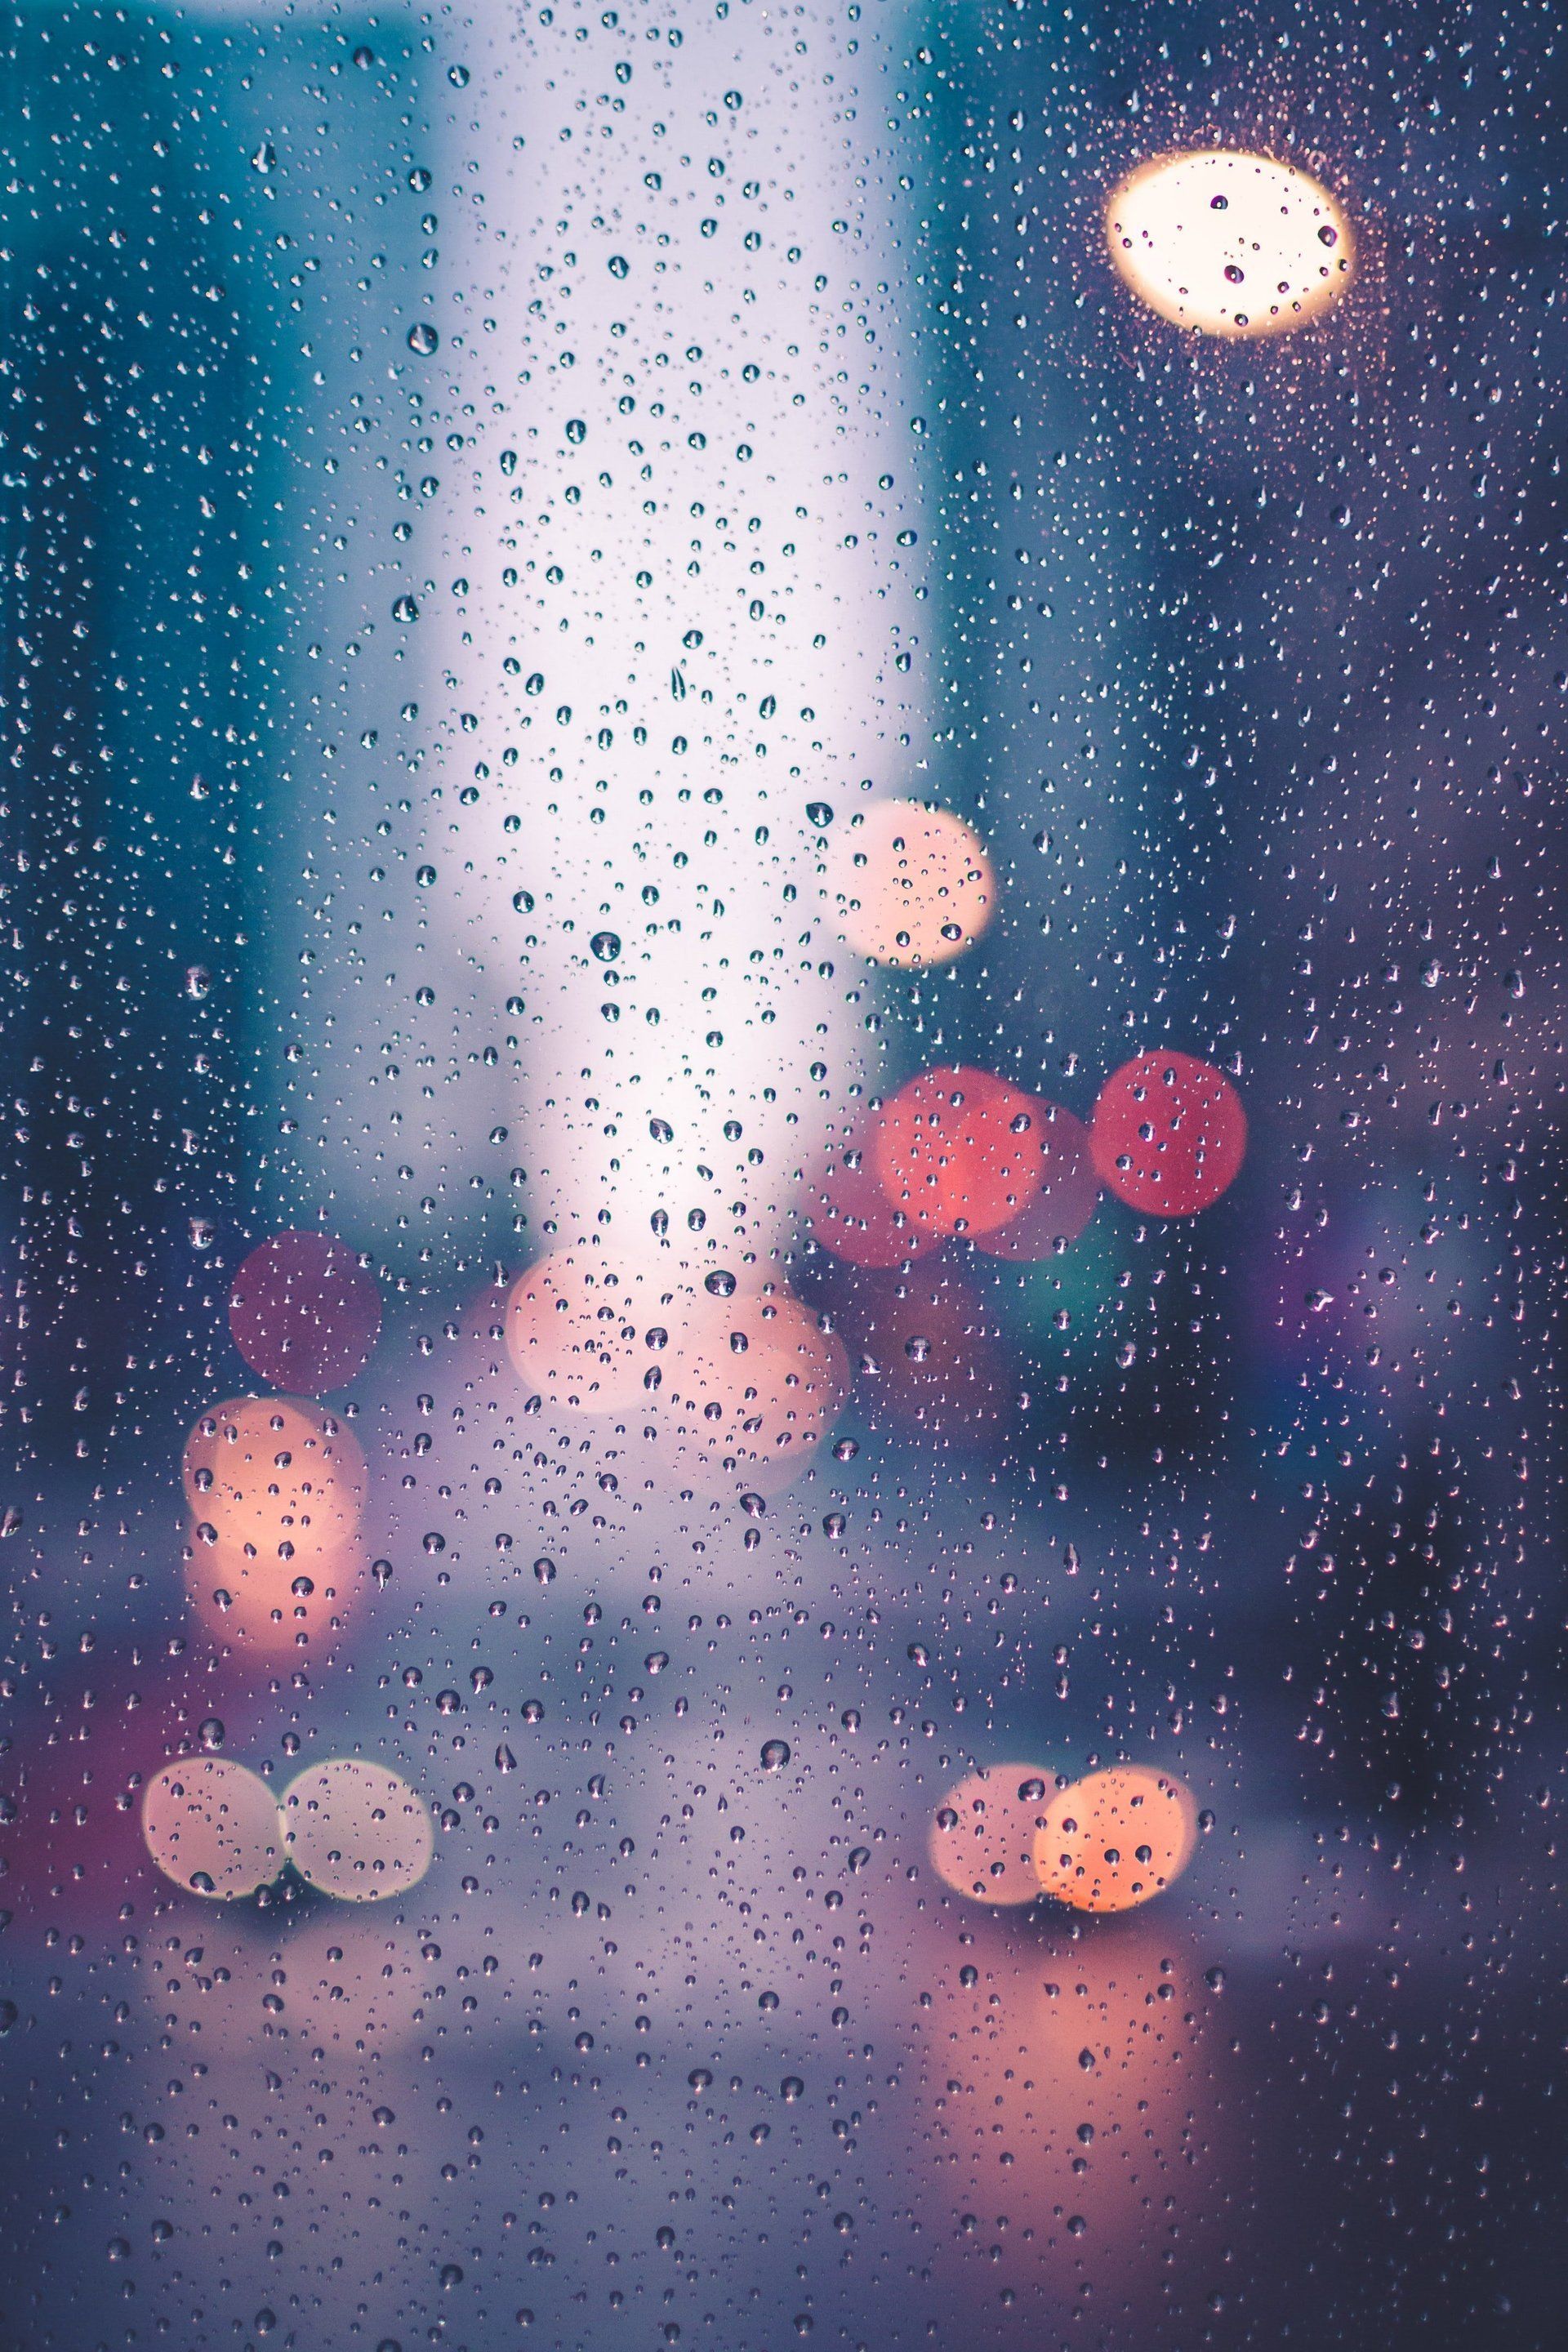 Rain Drops On Glass — City Glass in Jewells, NSW